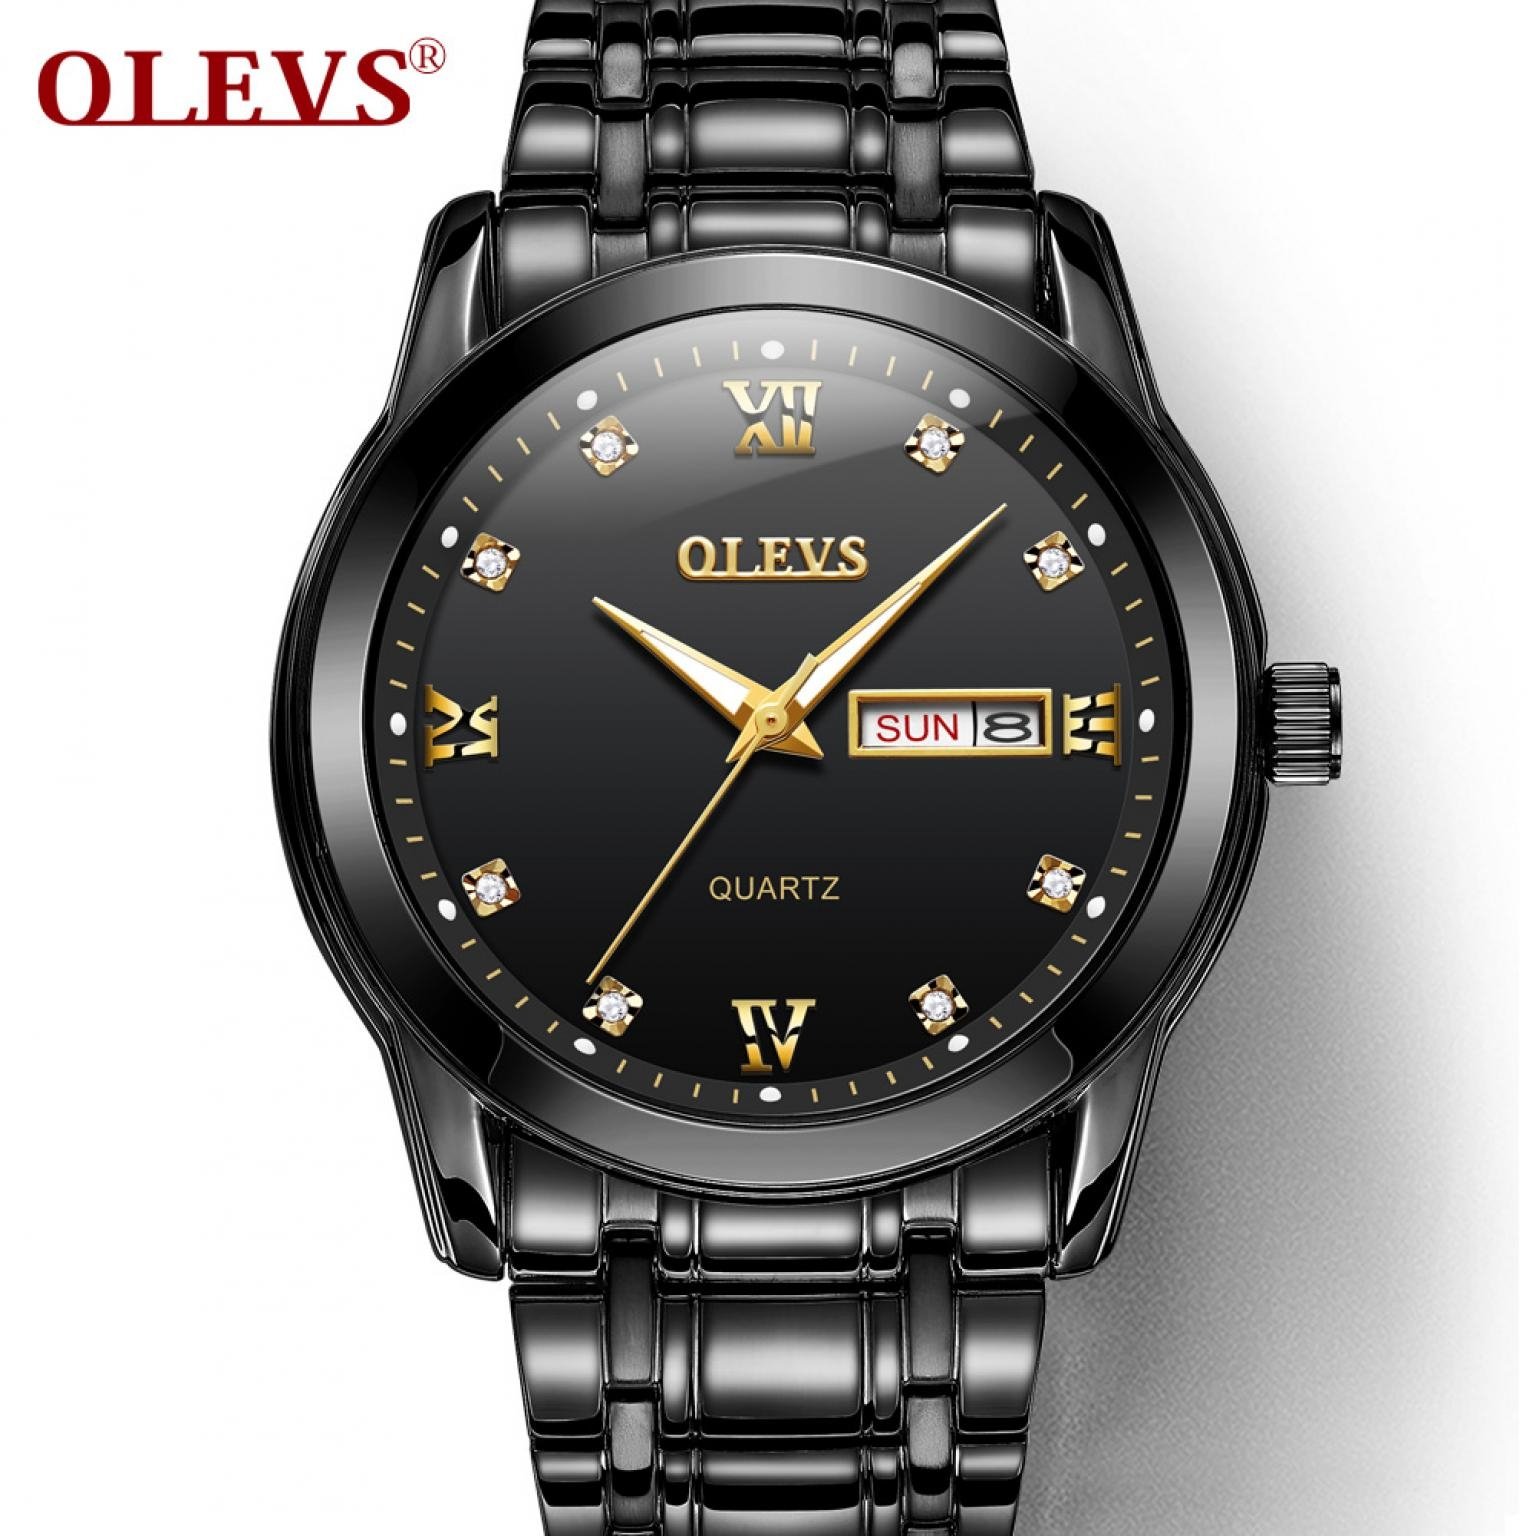 OLEVS Watches Mens Fashion Waterproof Stainless Steel Analogue Quartz Watch Luxury Diamonds Business Watch(OLEVS 6895)